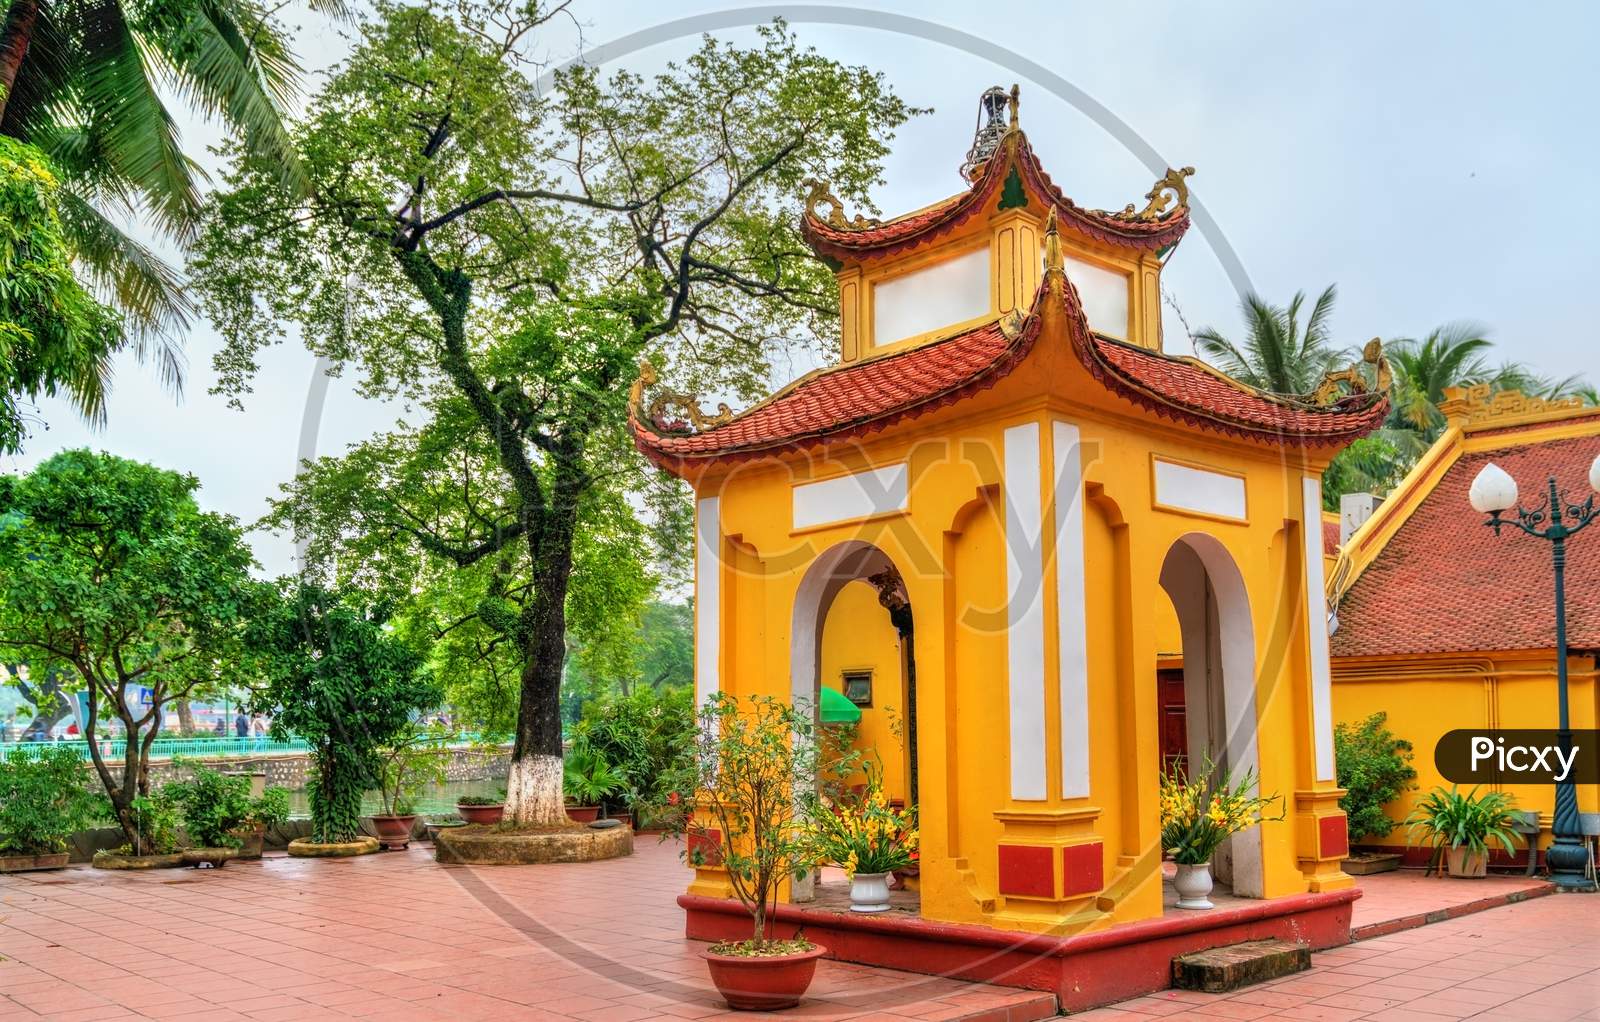 Tran Quoc Pagoda In Hanoi, Vietnam